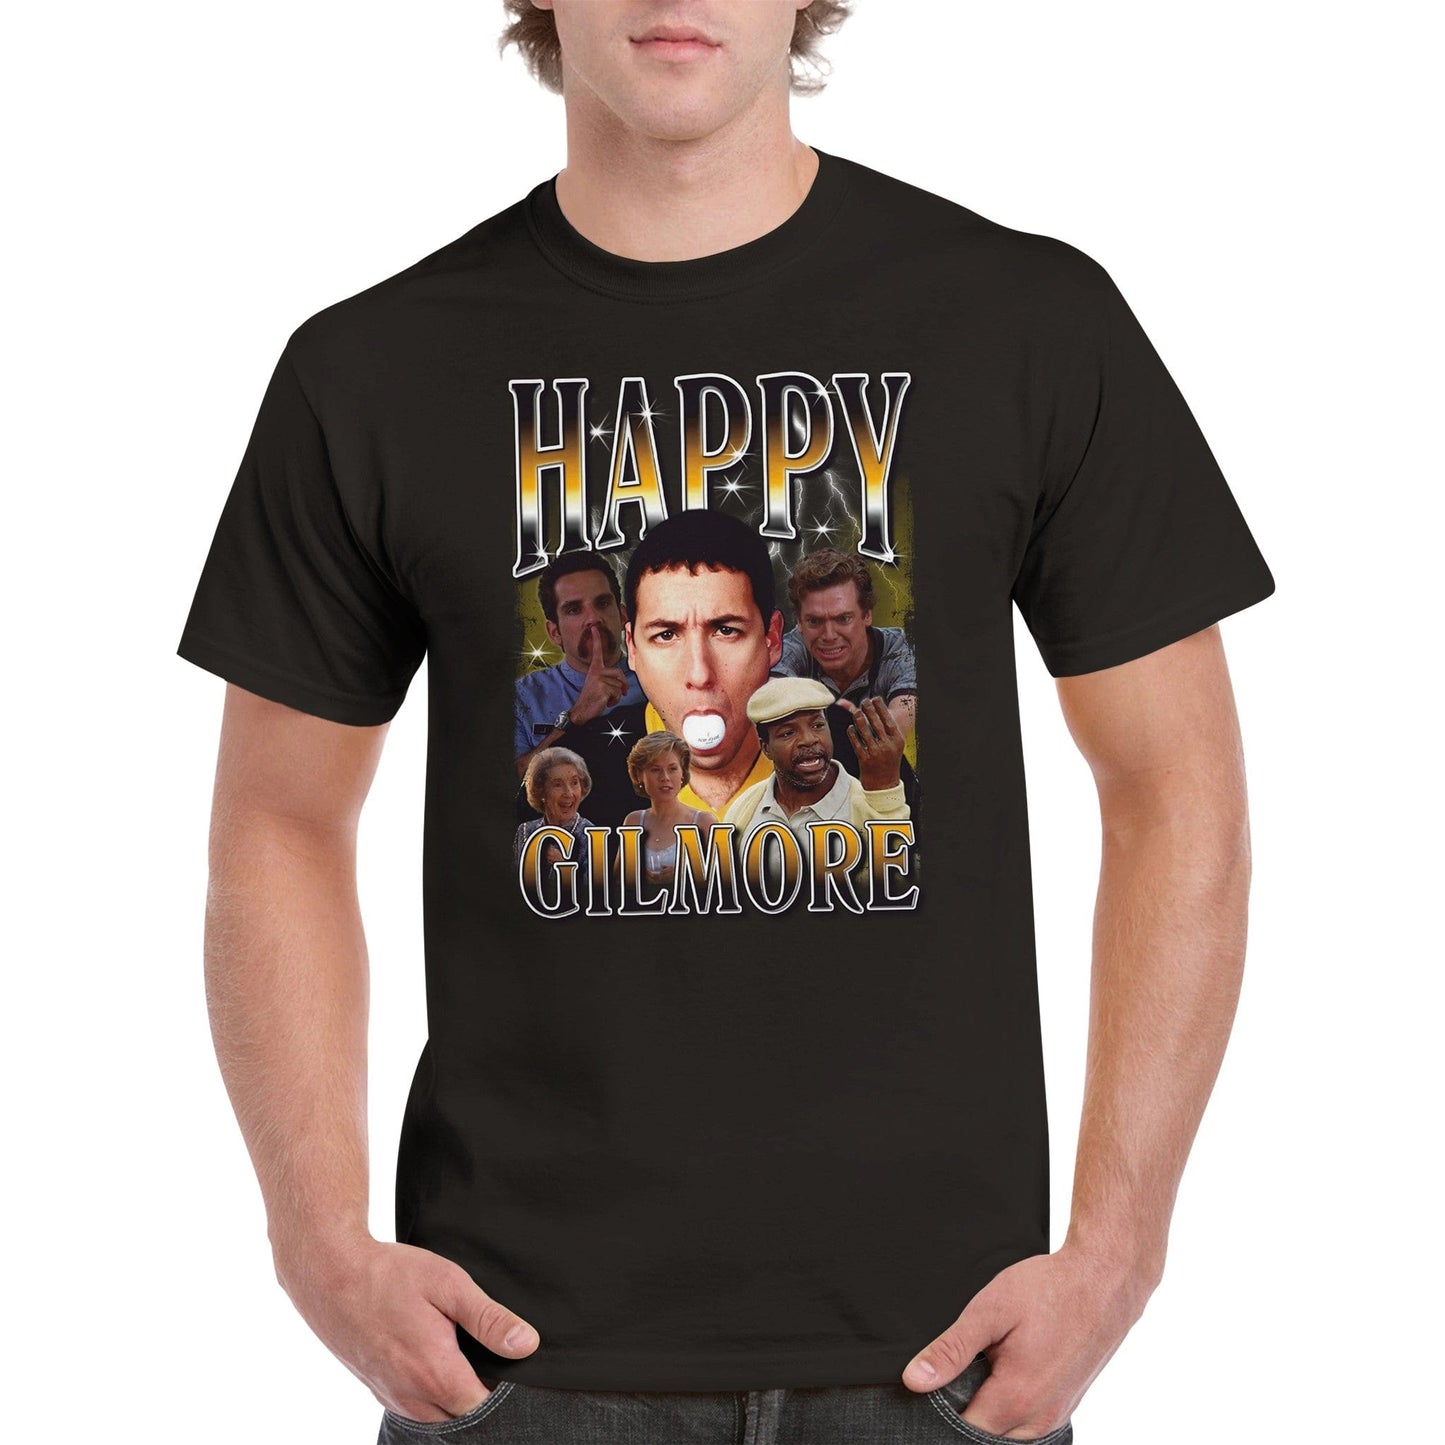 Happy Gilmore T-shirt Print Material BC Australia